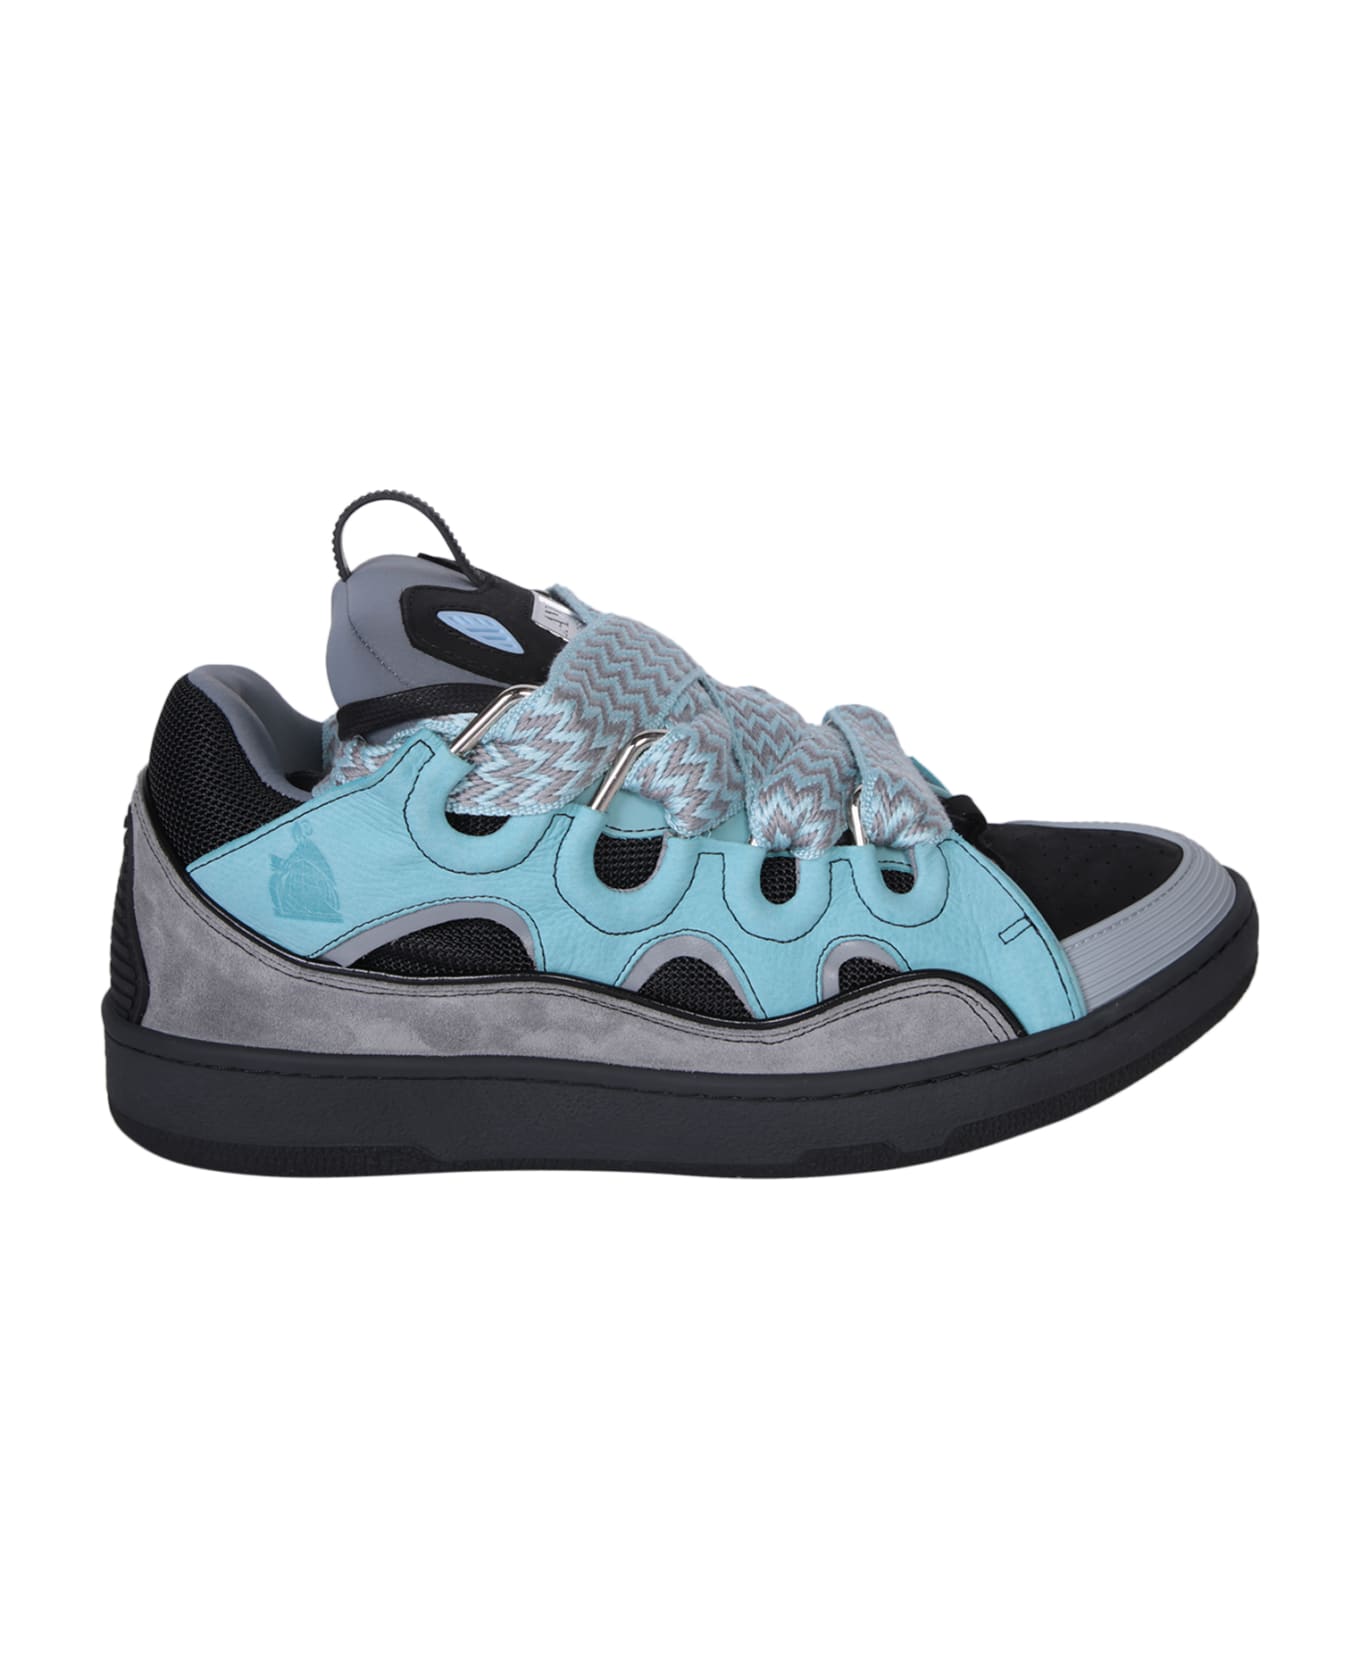 Lanvin Curb Grey/light Blue Sneakers - Blue